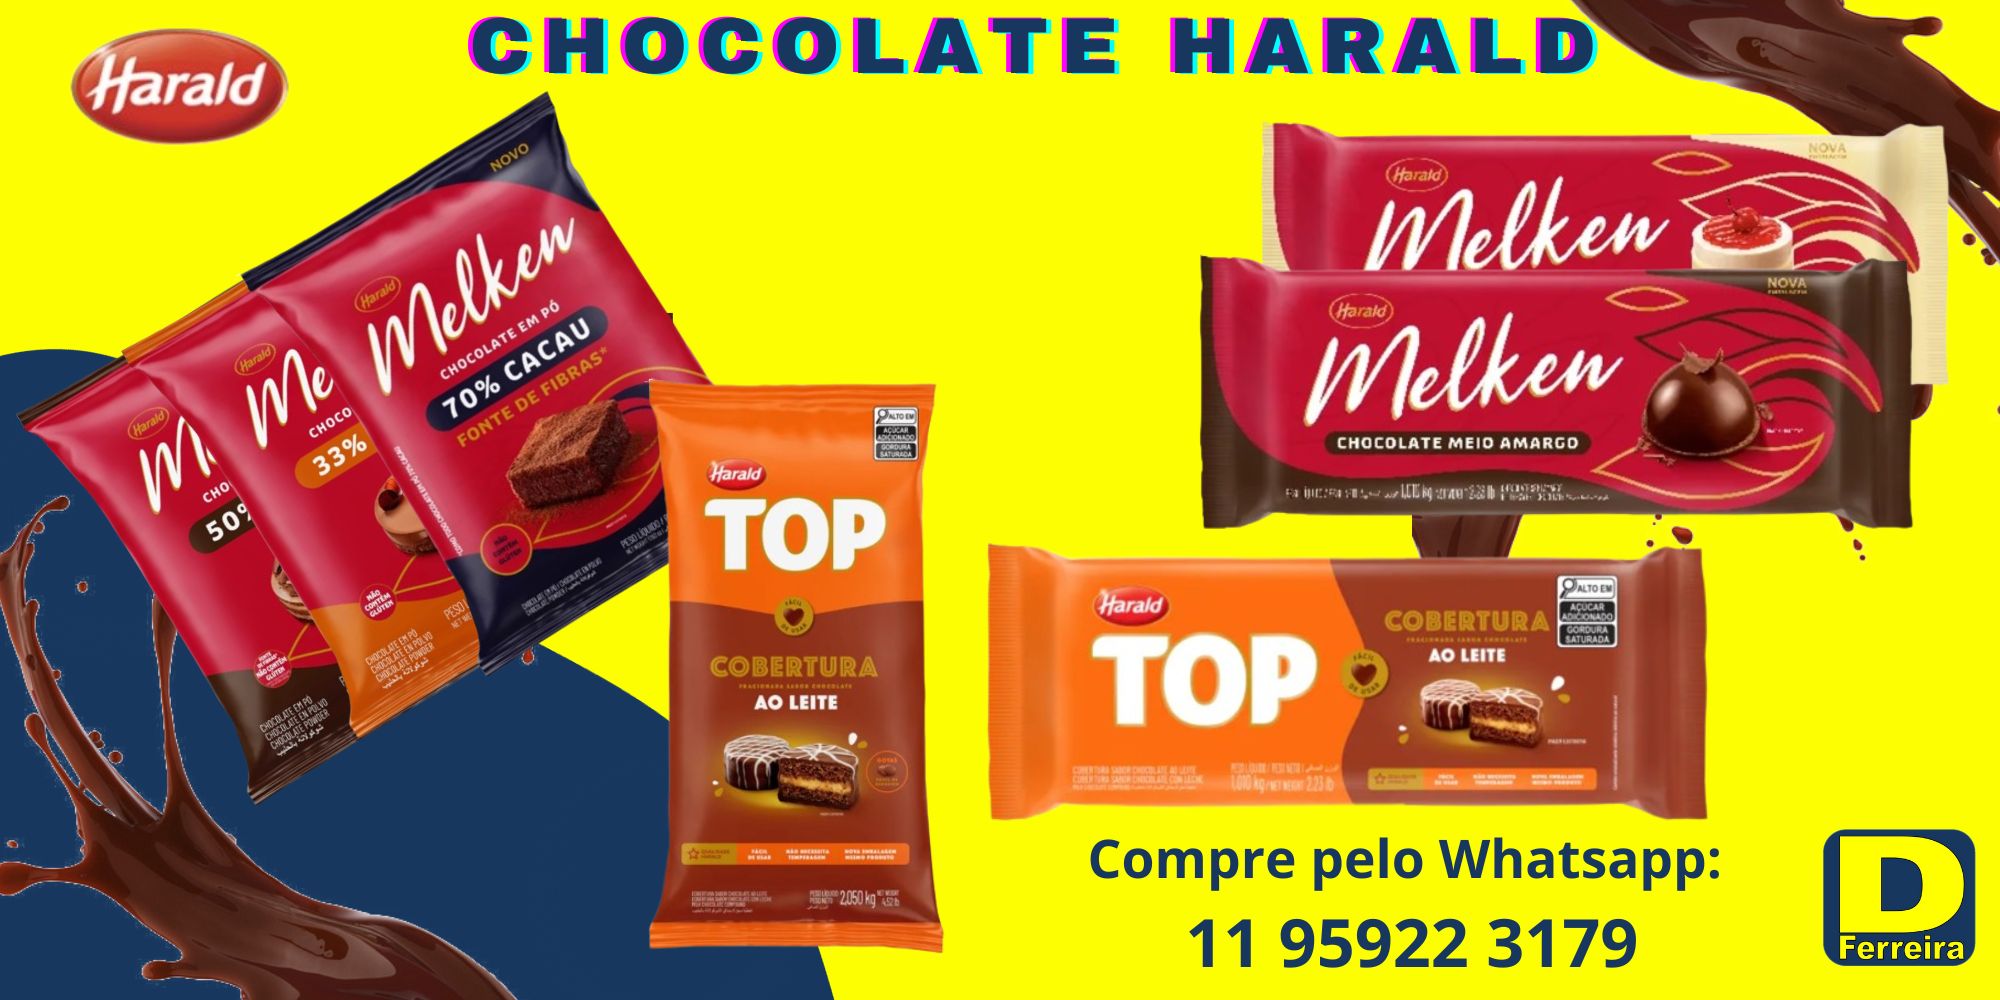 Chocolate Harald